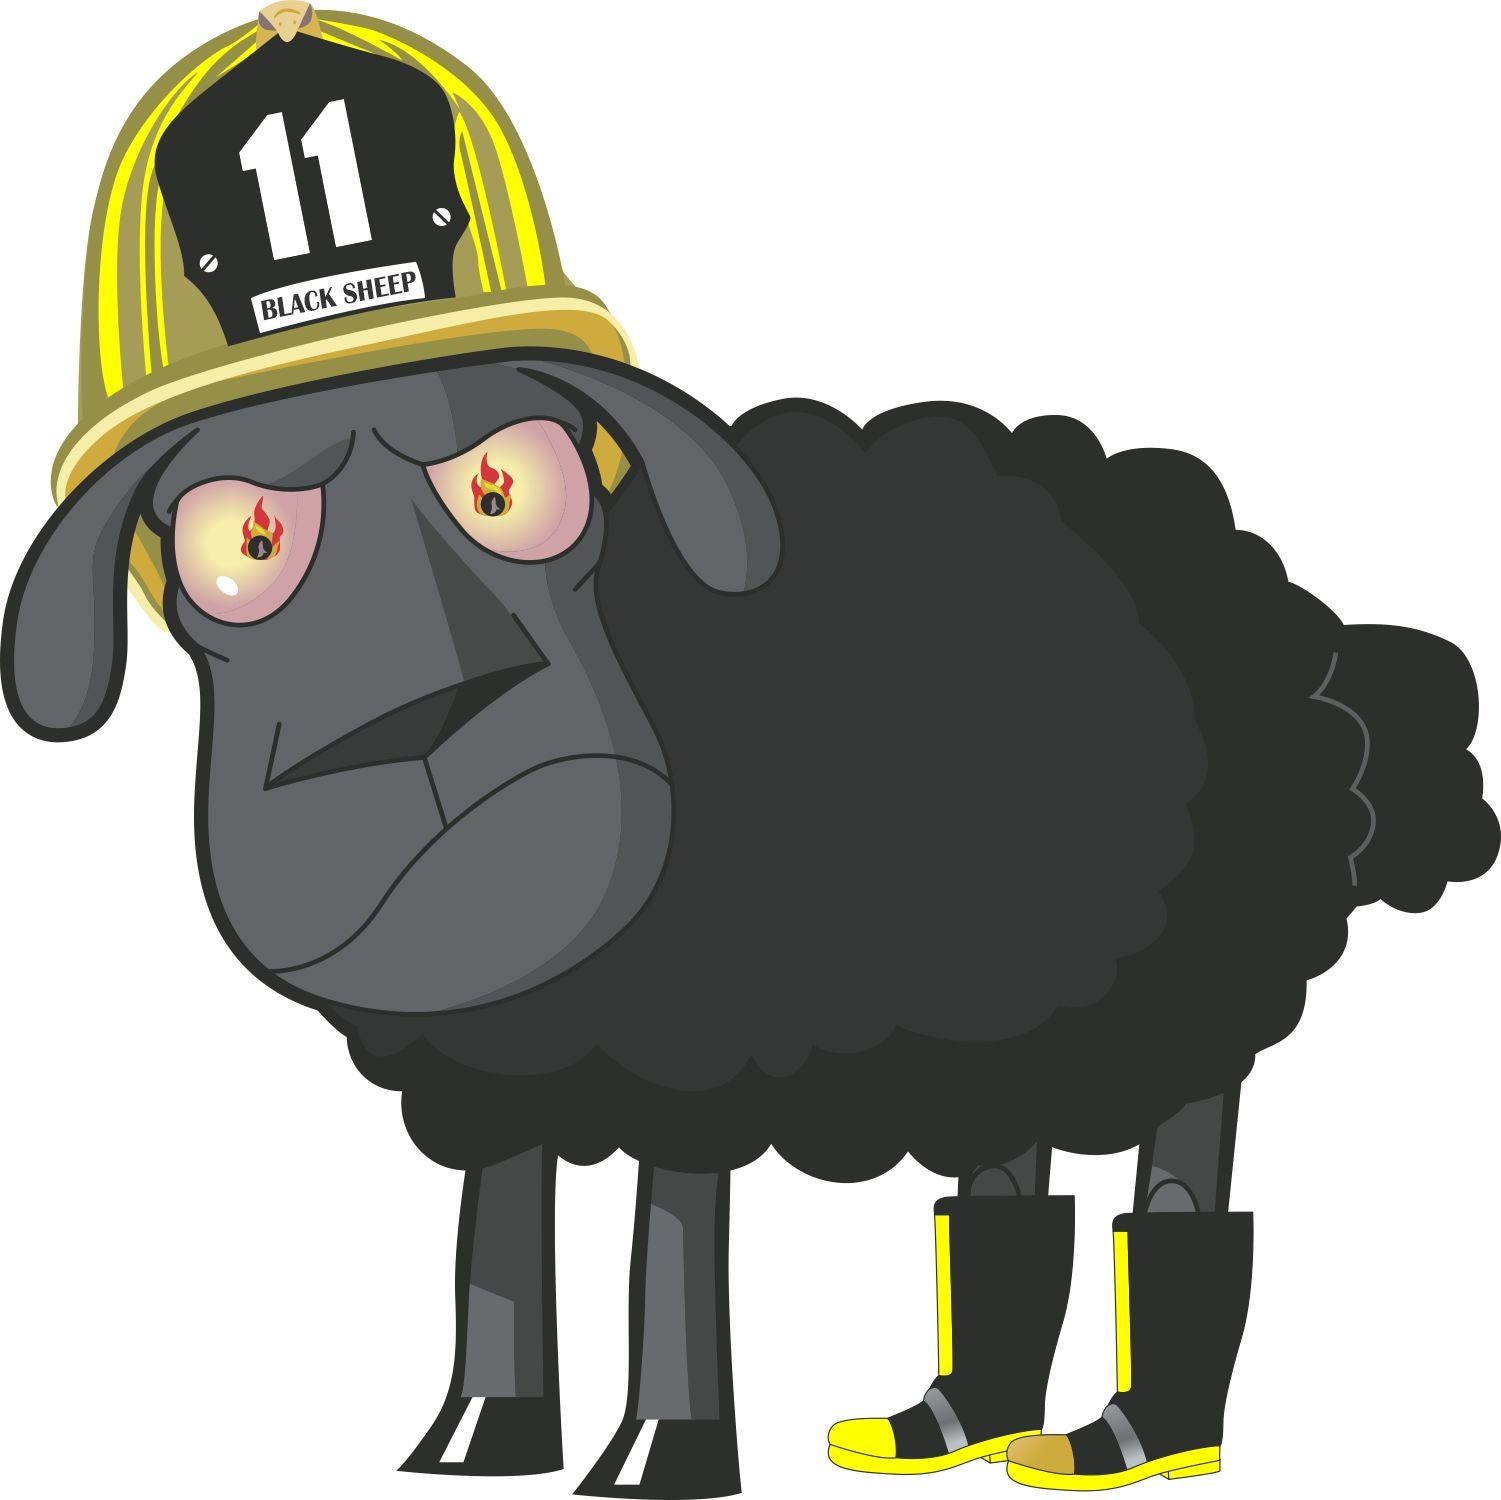 Black Sheep #11 Customer Decal - Powercall Sirens LLC